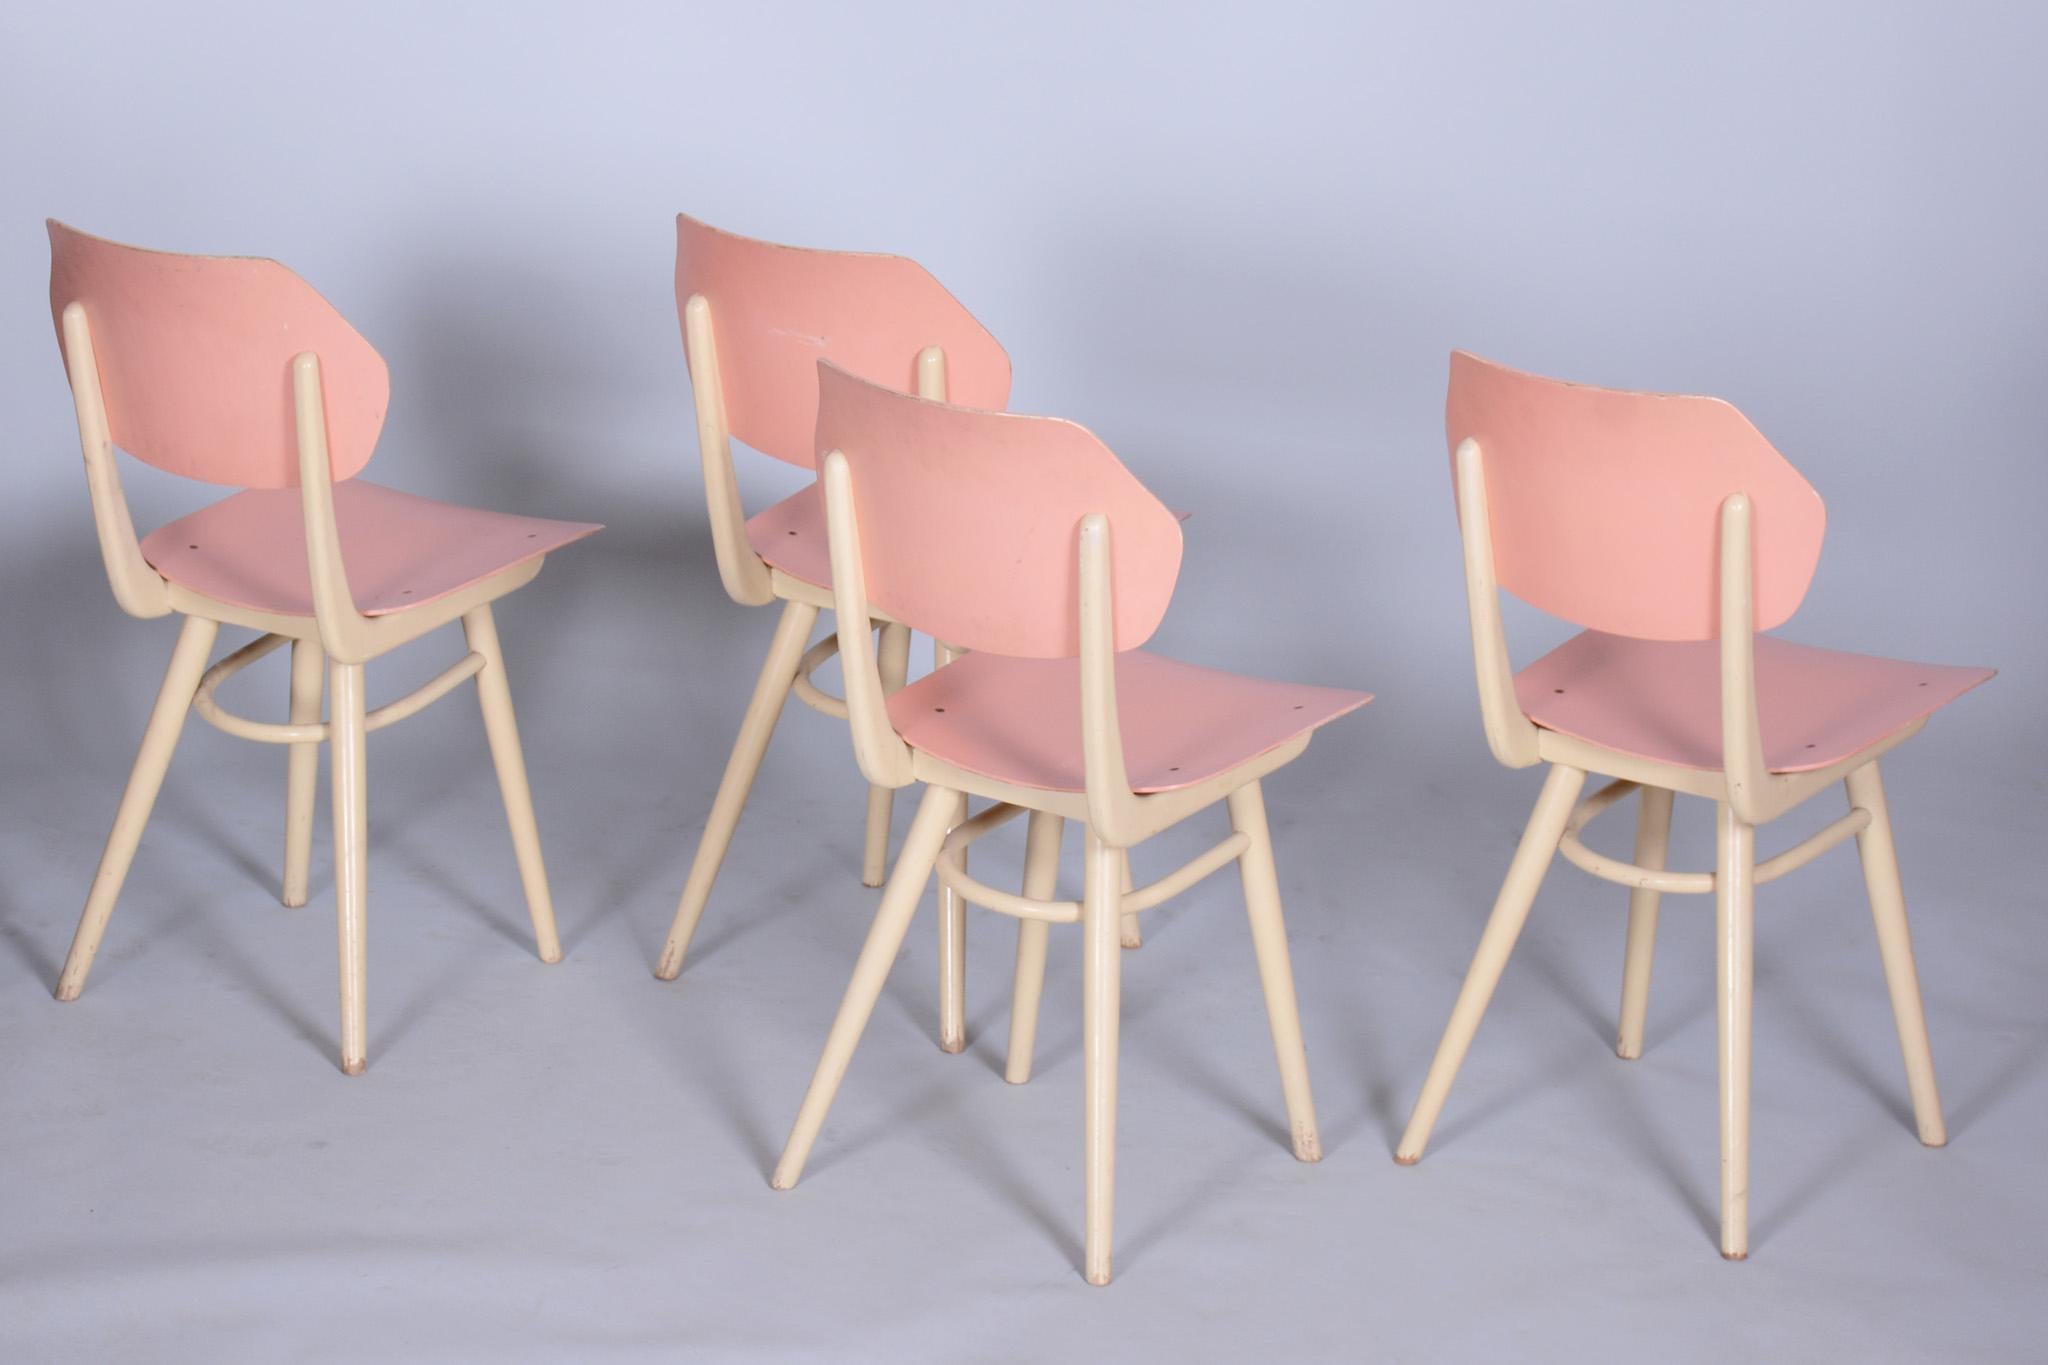 Set of Four Original Midcentury Chairs, Jitona Sobeslav, Beech, Czechia, 1950s In Good Condition For Sale In Horomerice, CZ